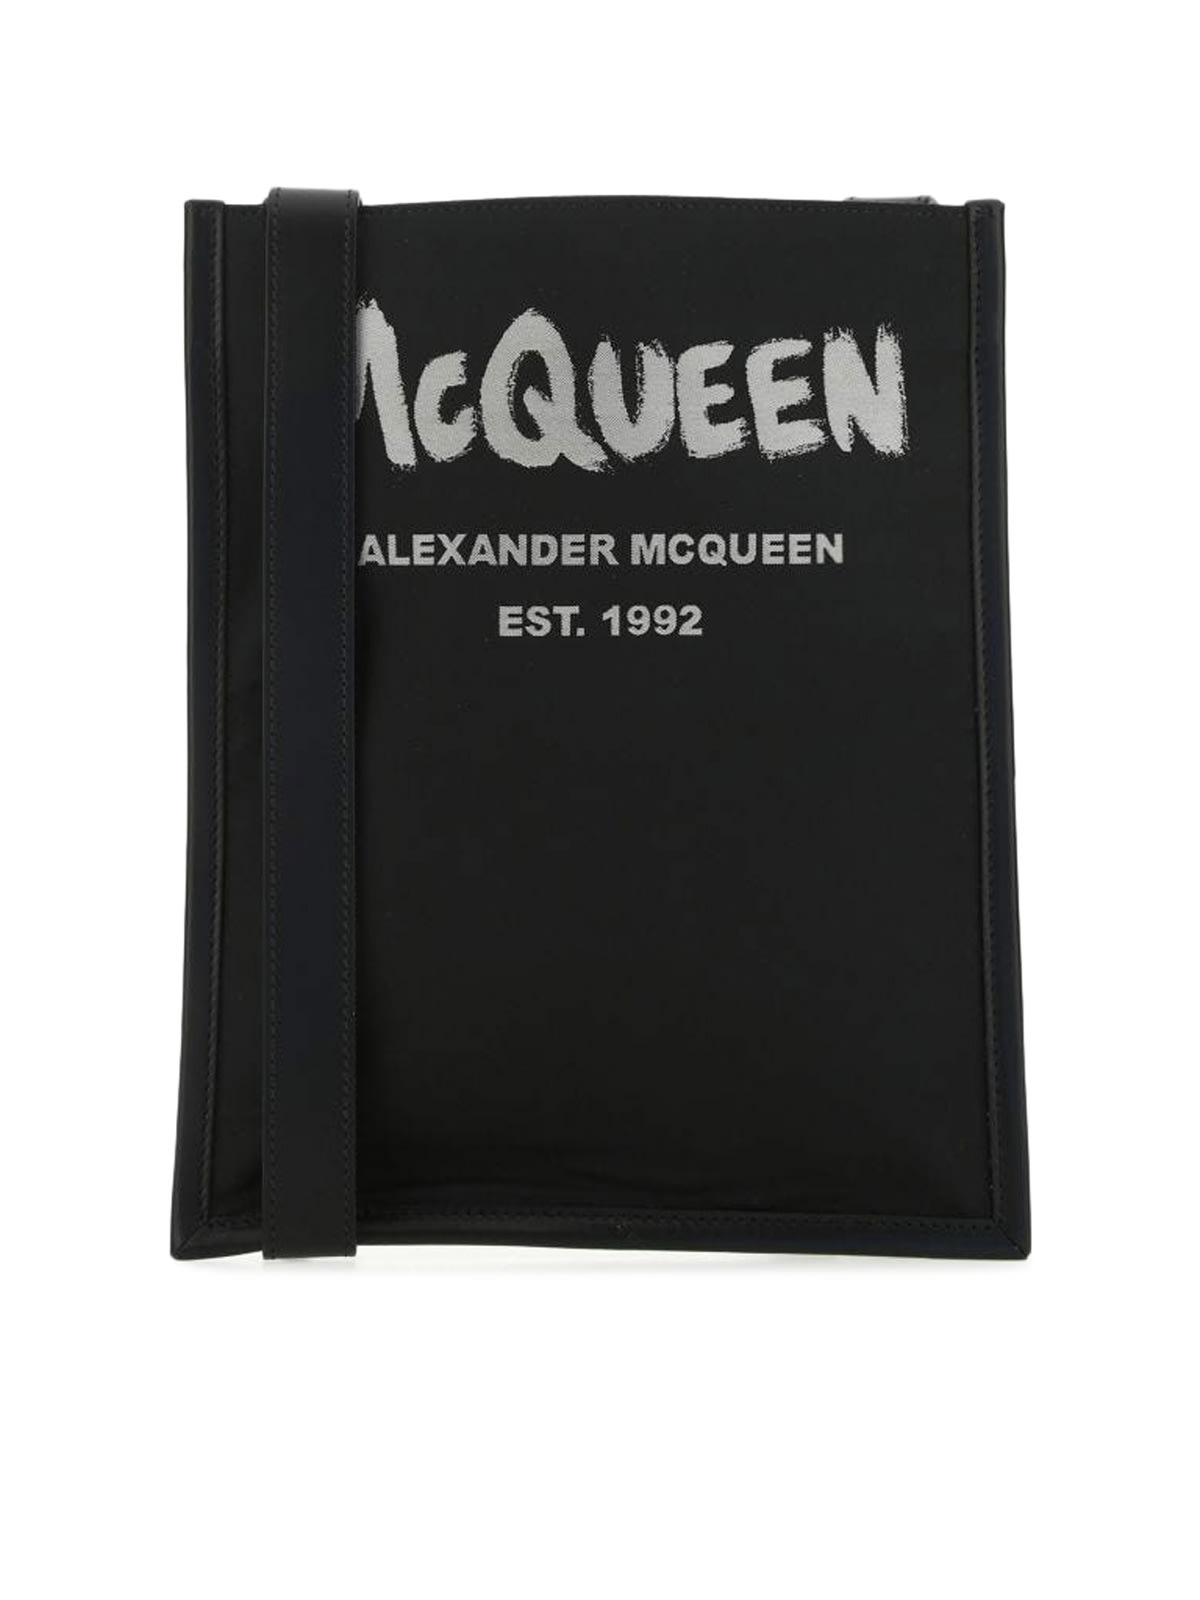 Alexander McQueen Flat Phone Bag